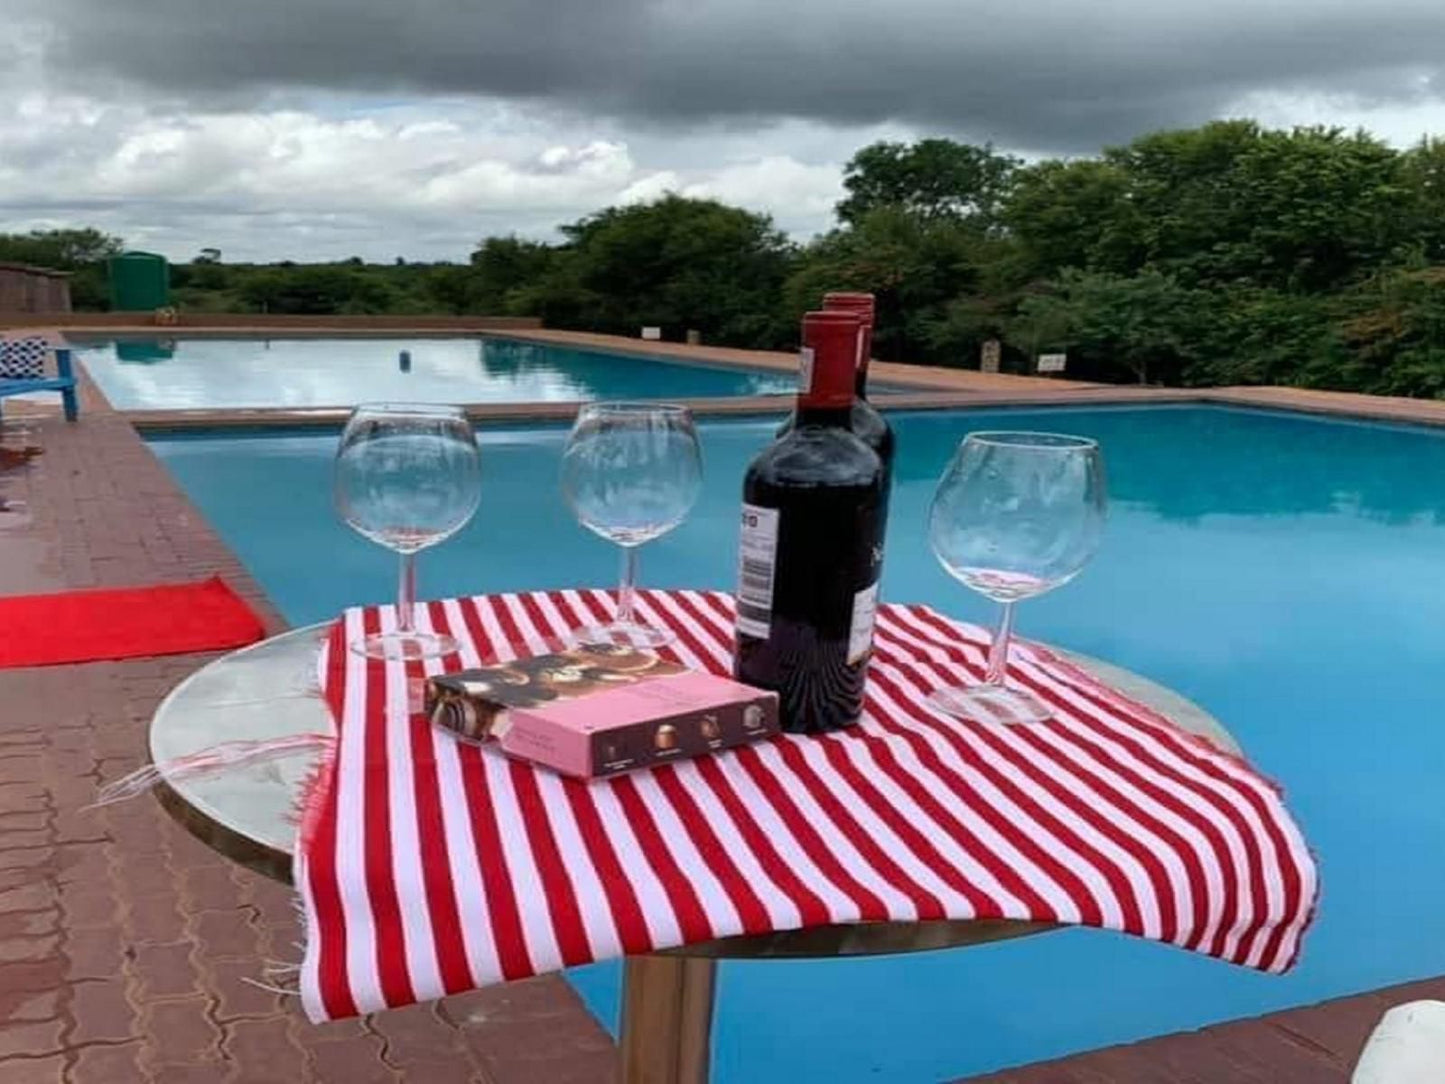 Tshinakie Family Resort Mooiplaats Mooiplaats Pretoria Tshwane Gauteng South Africa Food, Swimming Pool